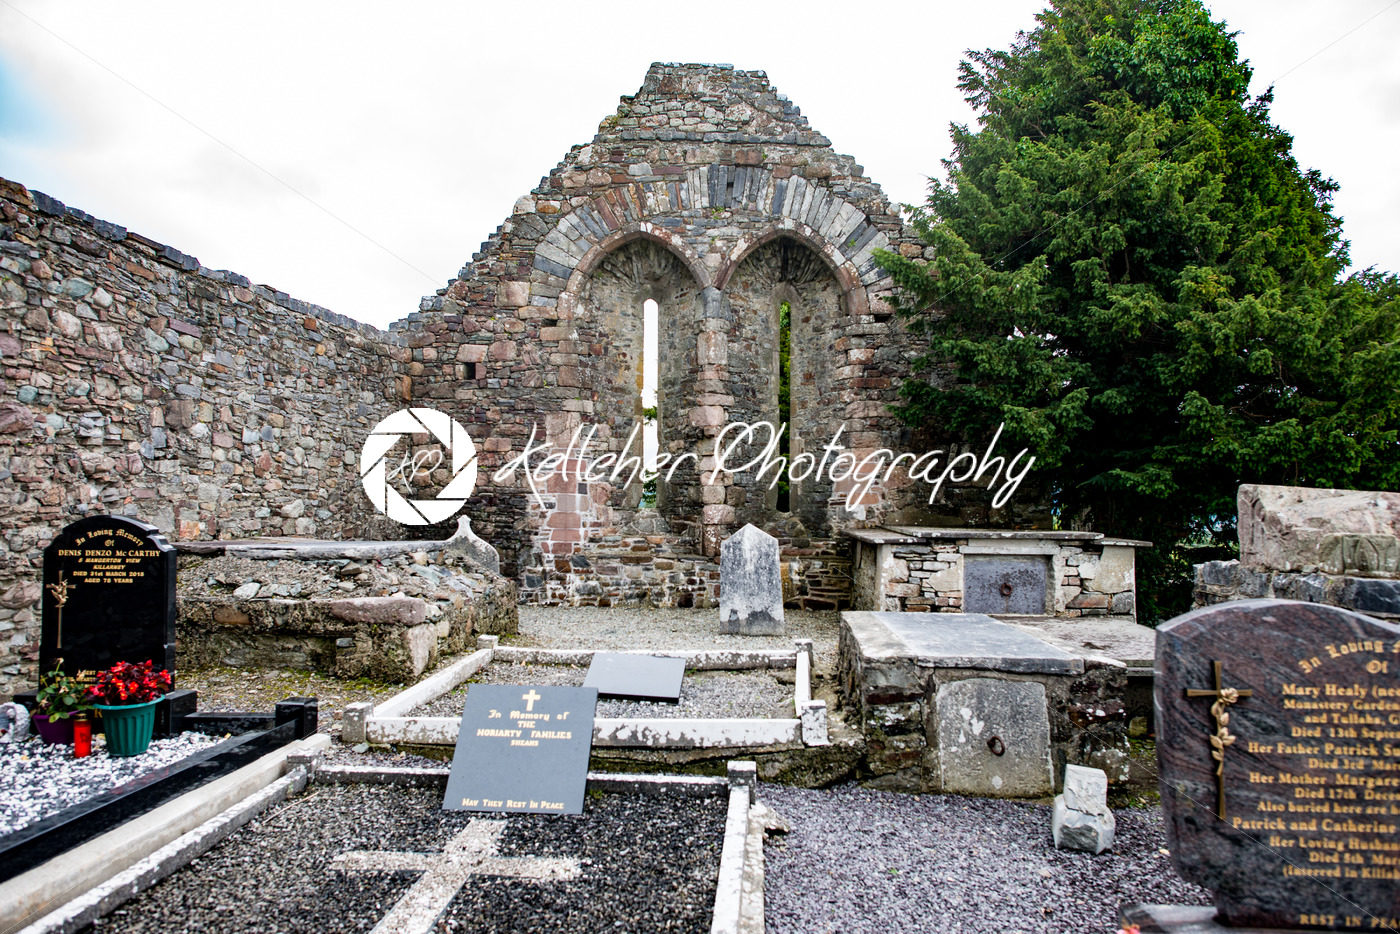 KILLARNEY, IRELAND – AUGUST 20, 2017: Aghadoe Church and Round Tower in Killarney Ireland - Kelleher Photography Store